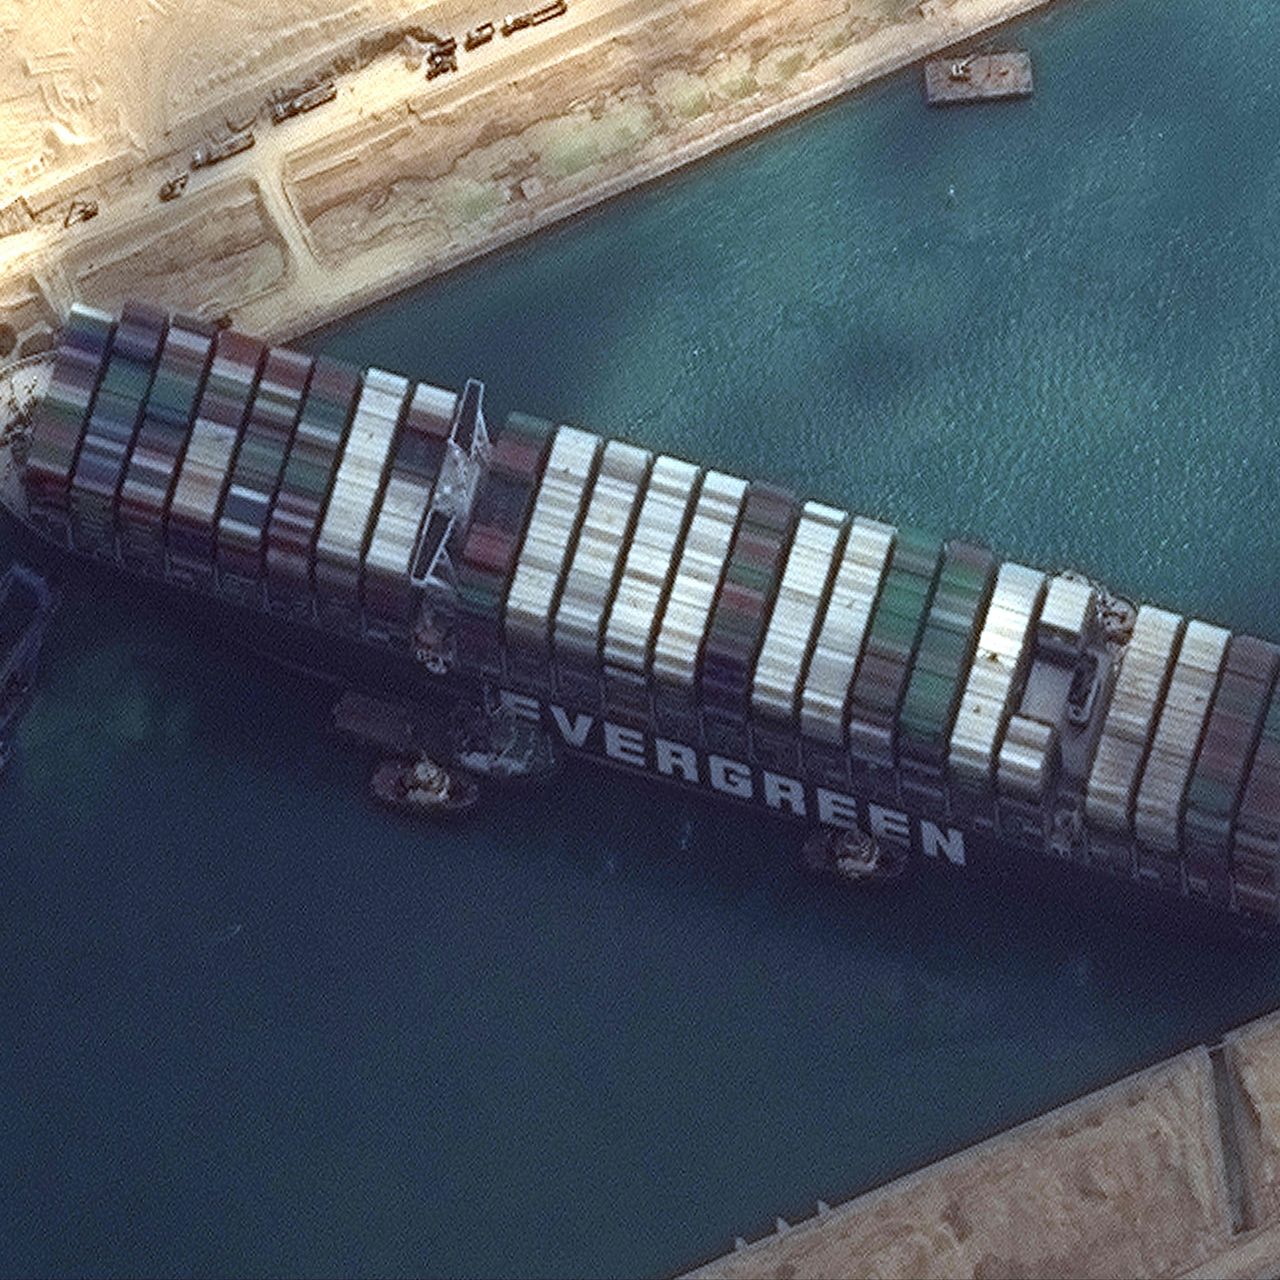 Suez Canal problem will impact Tirupur Readymade clothes export